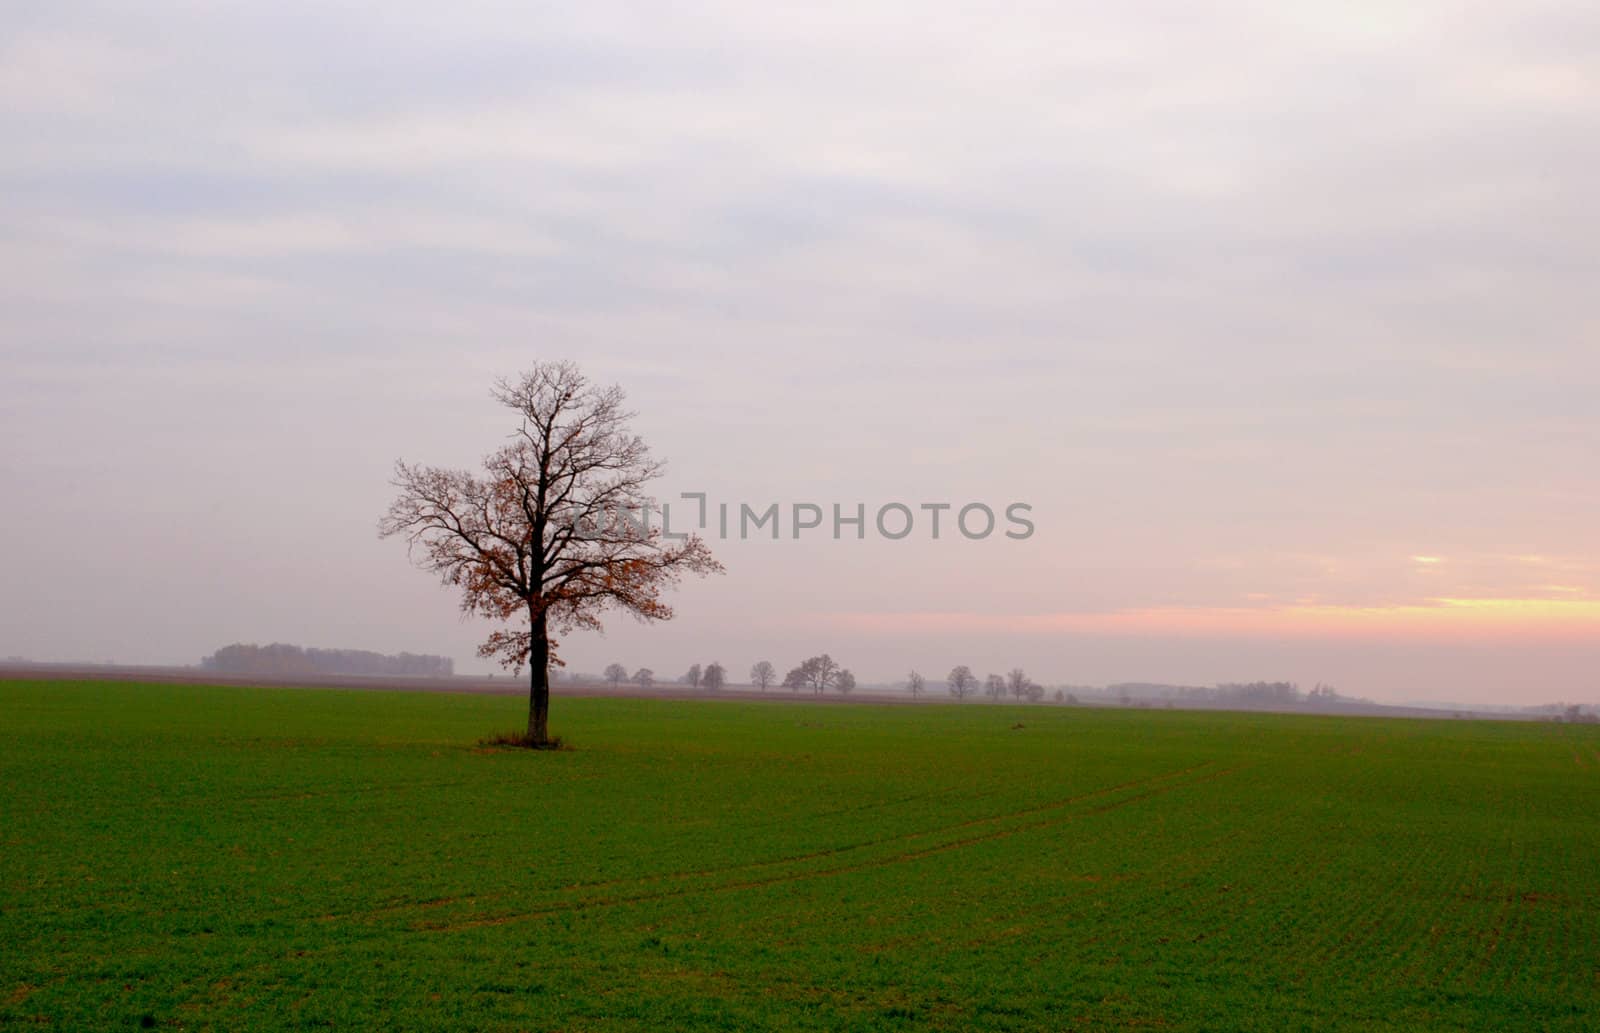 Alone tree in the fields immediaetly attracts eye